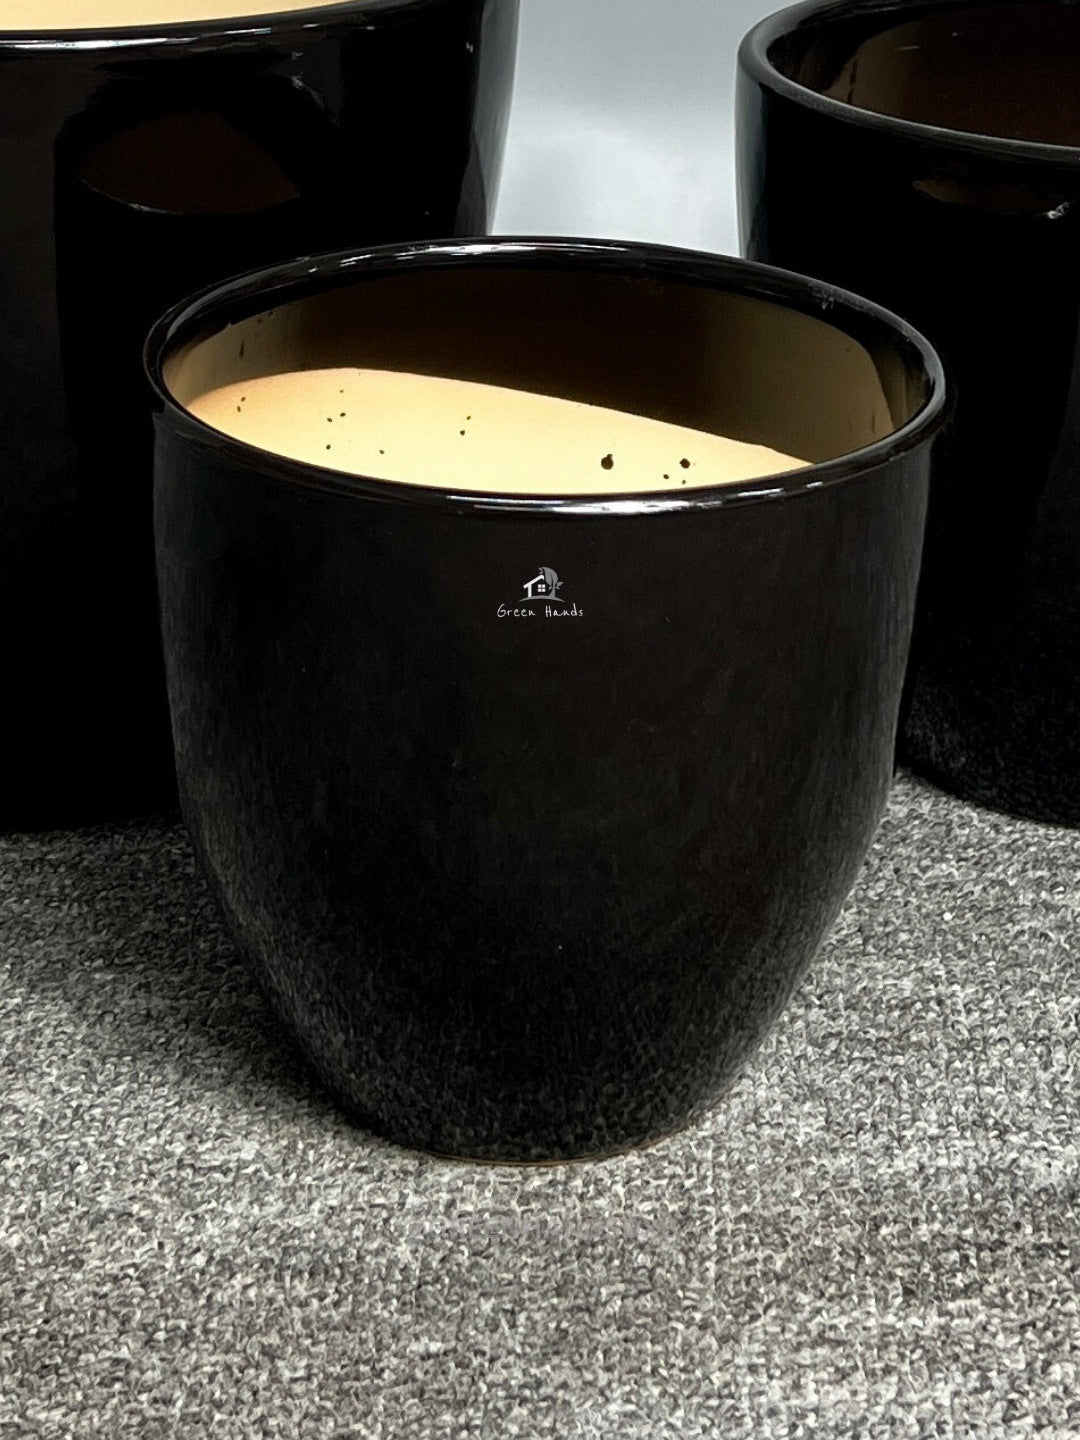 Sleek Black Ceramic Pots in Dubai & Abu Dhabi: Minimalistic Modern Design with Drain Holes